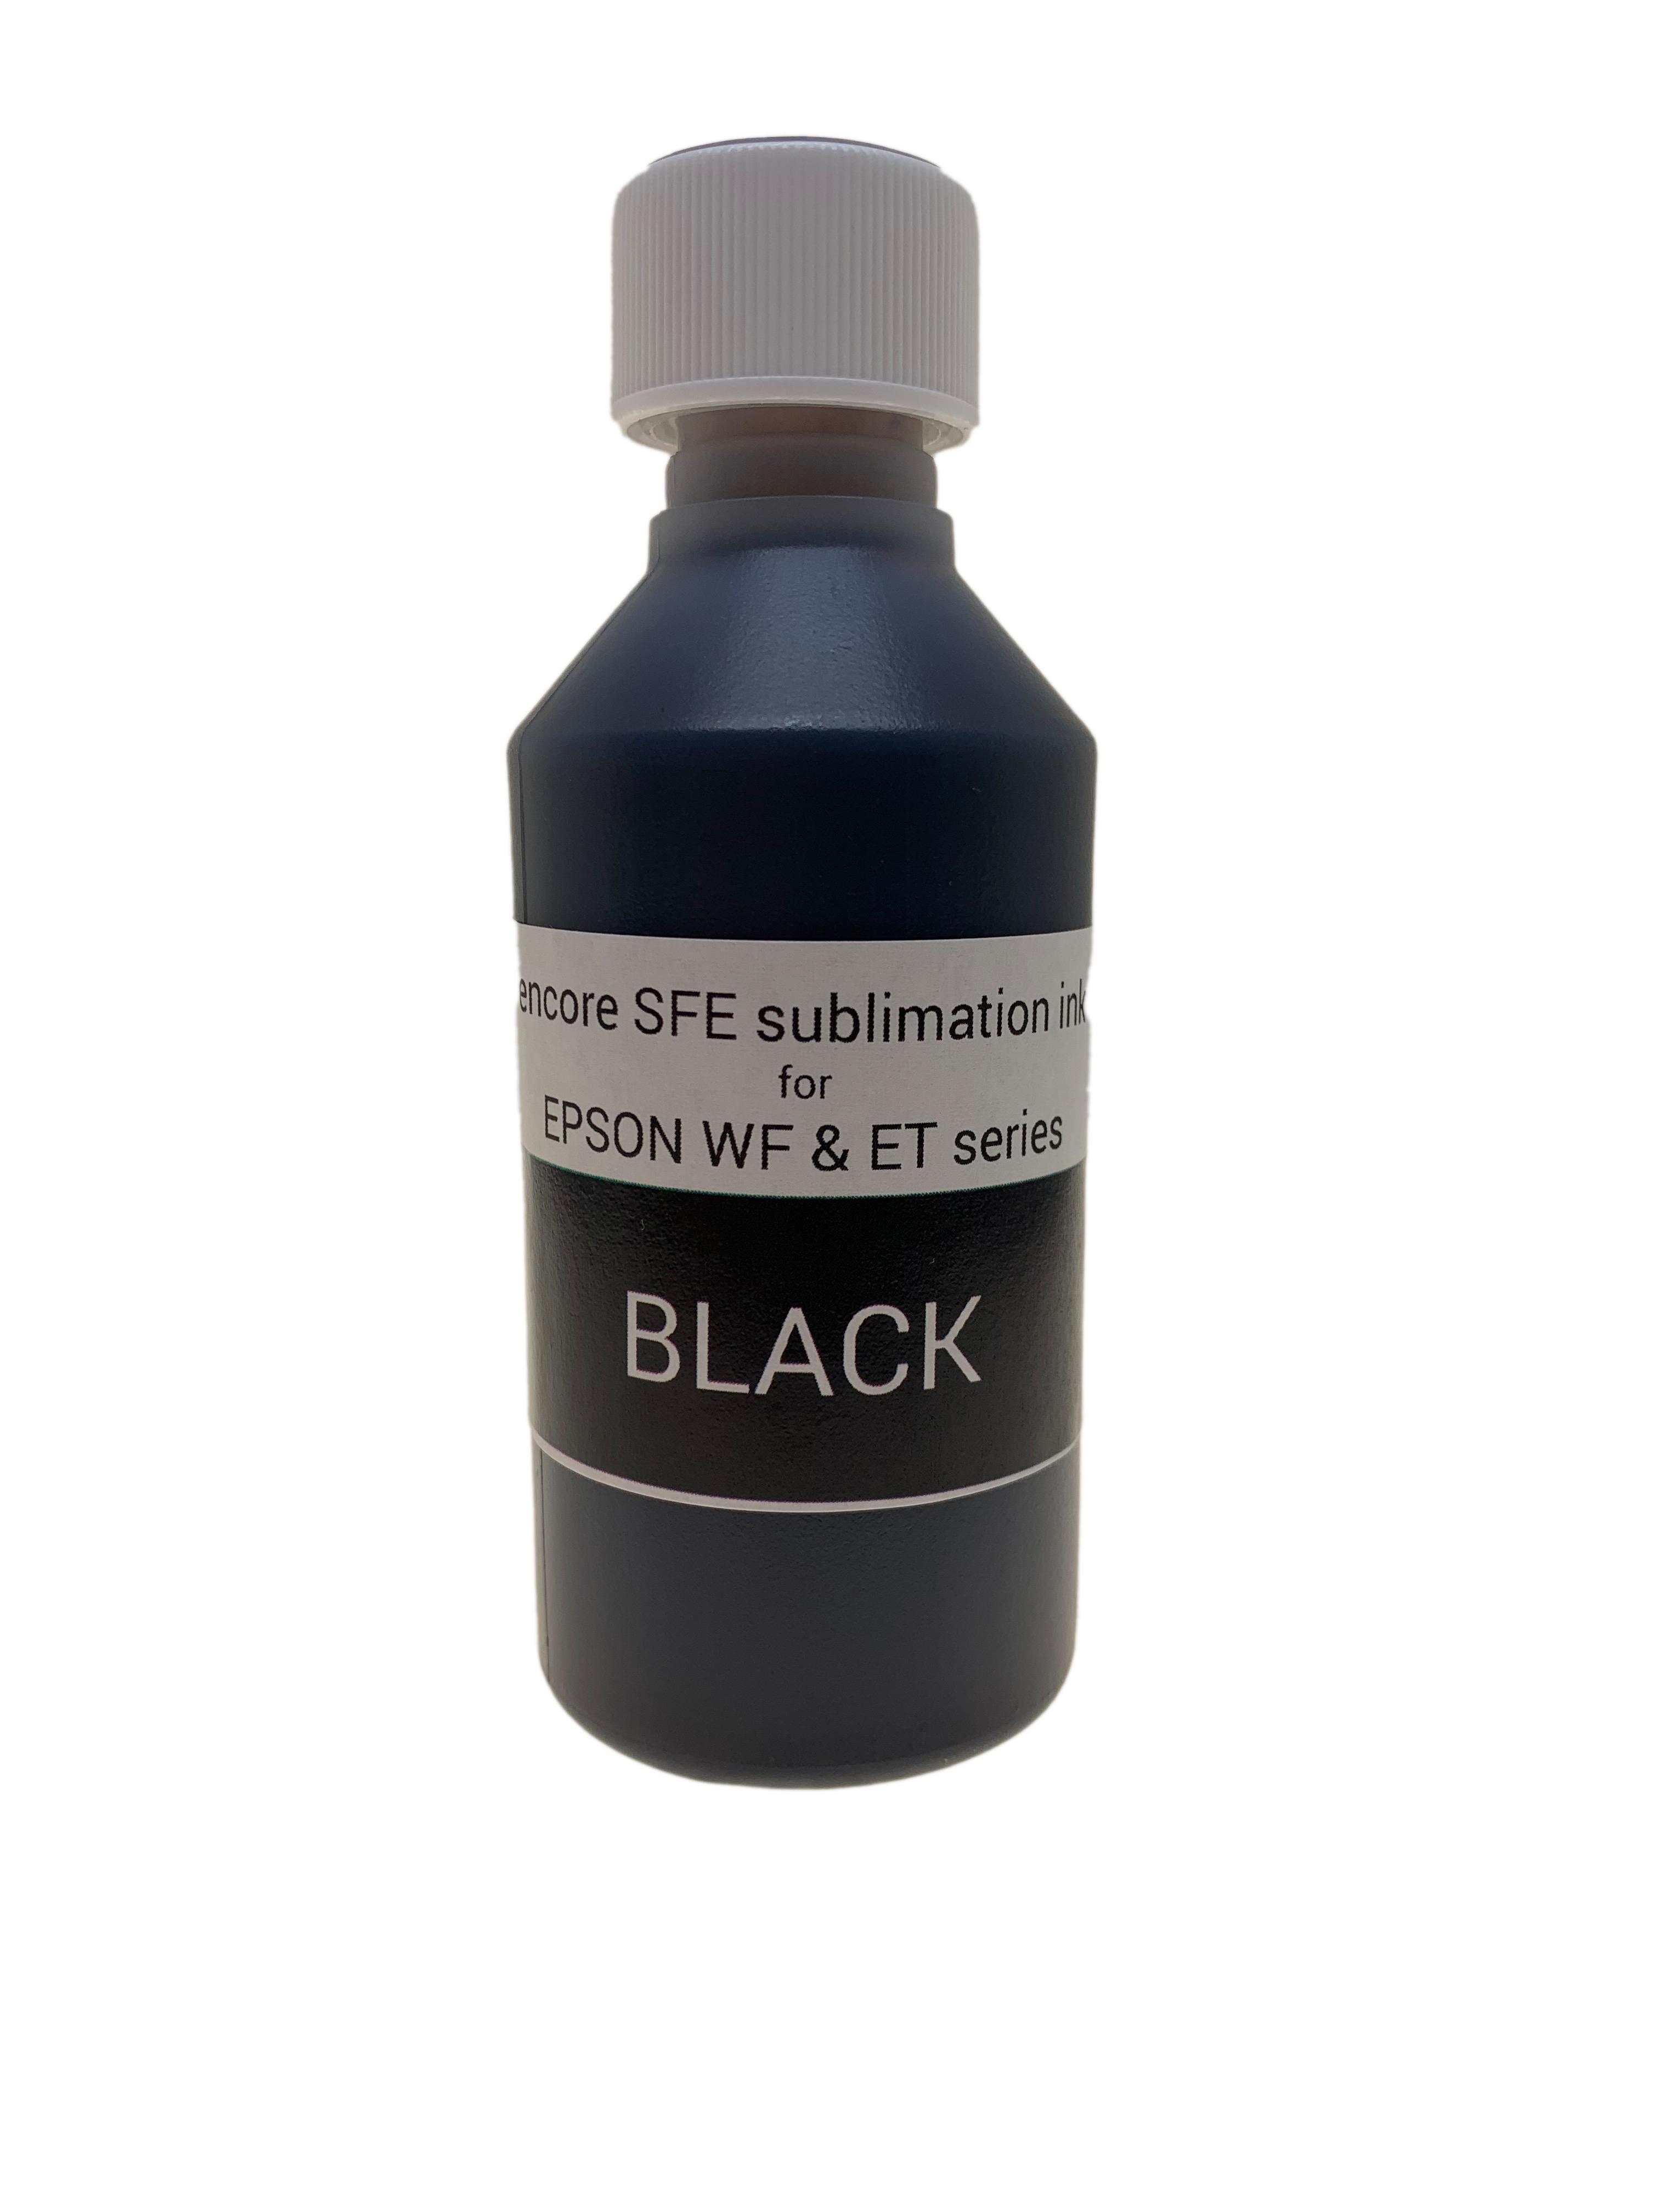 Epson Workforce (WF) Sublimation Ink Refill Black 60ml - Rainbowjet Digital